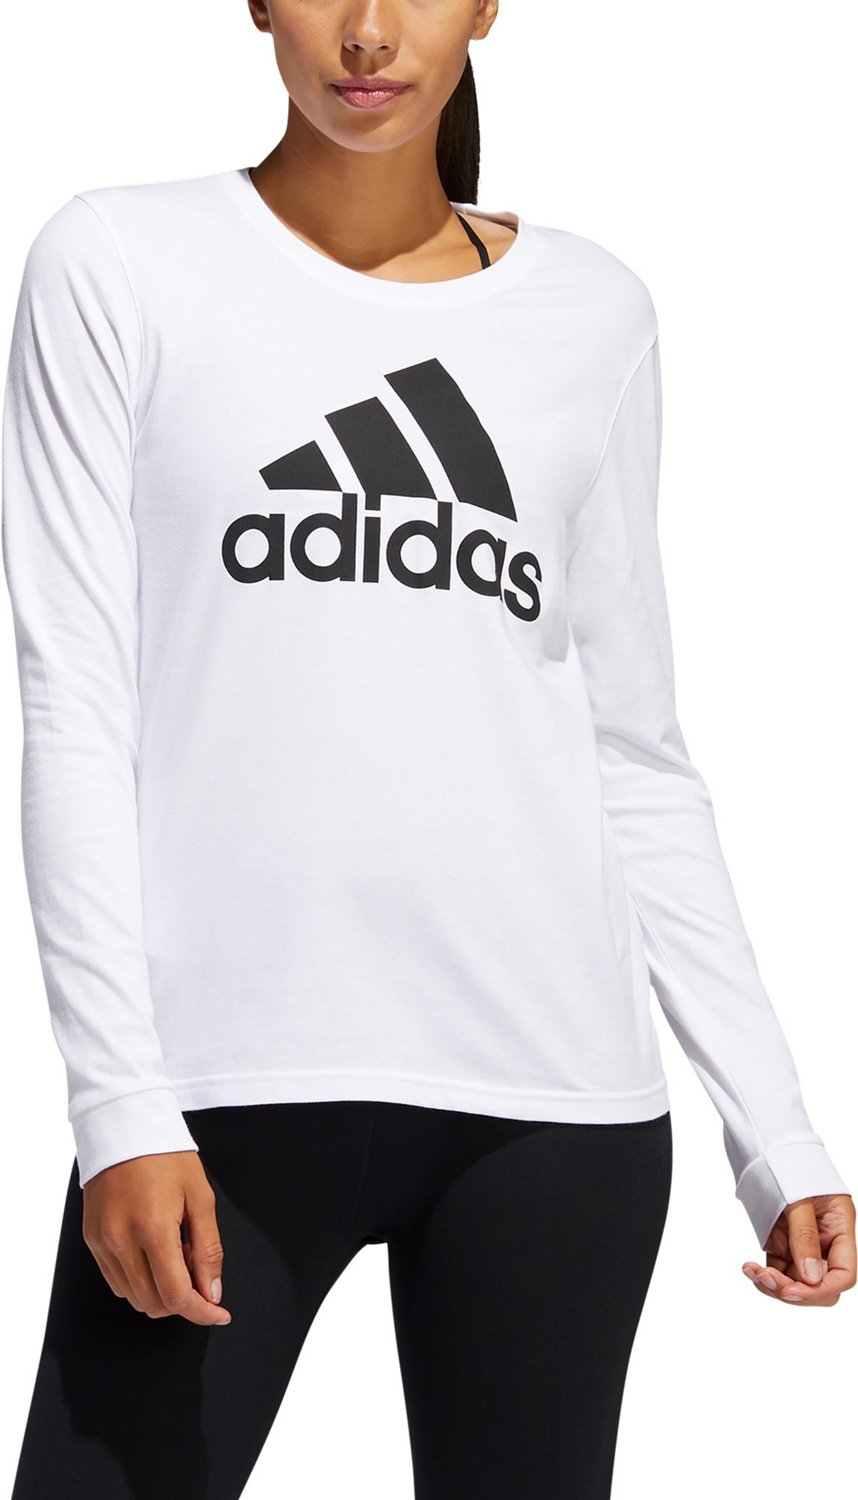 Afm Wees tevreden reactie adidas Women's Basic Badge of Sport Long Sleeve T-shirt | Academy